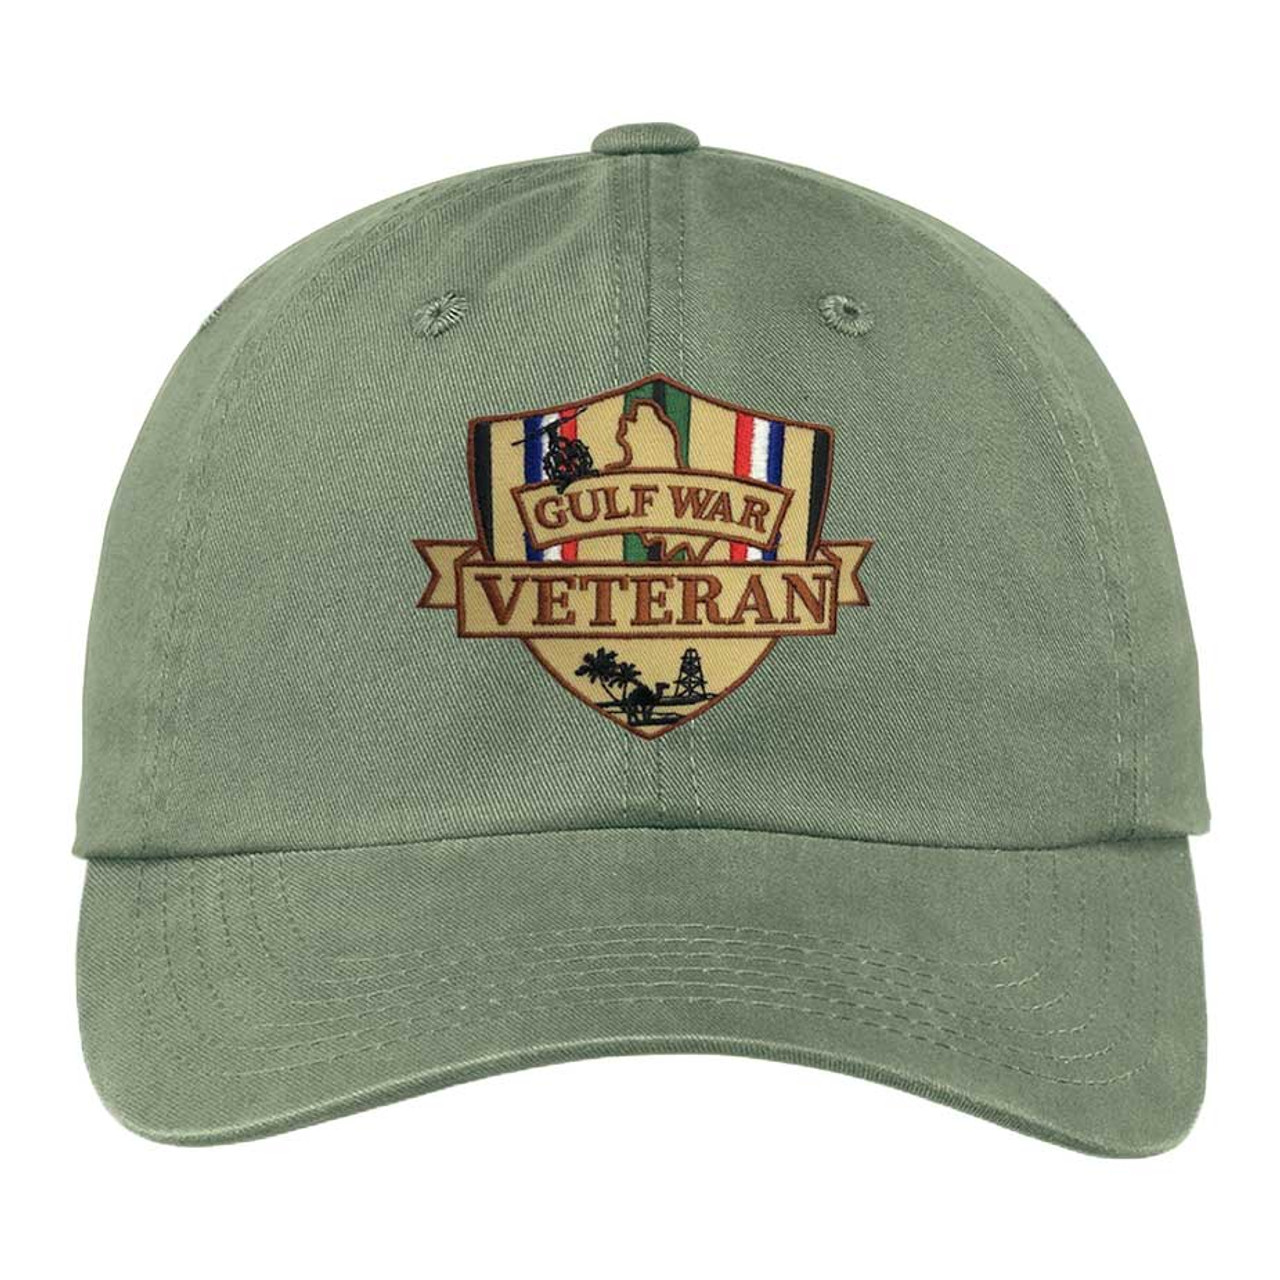 gulf war veteran hat shield and ribbon s